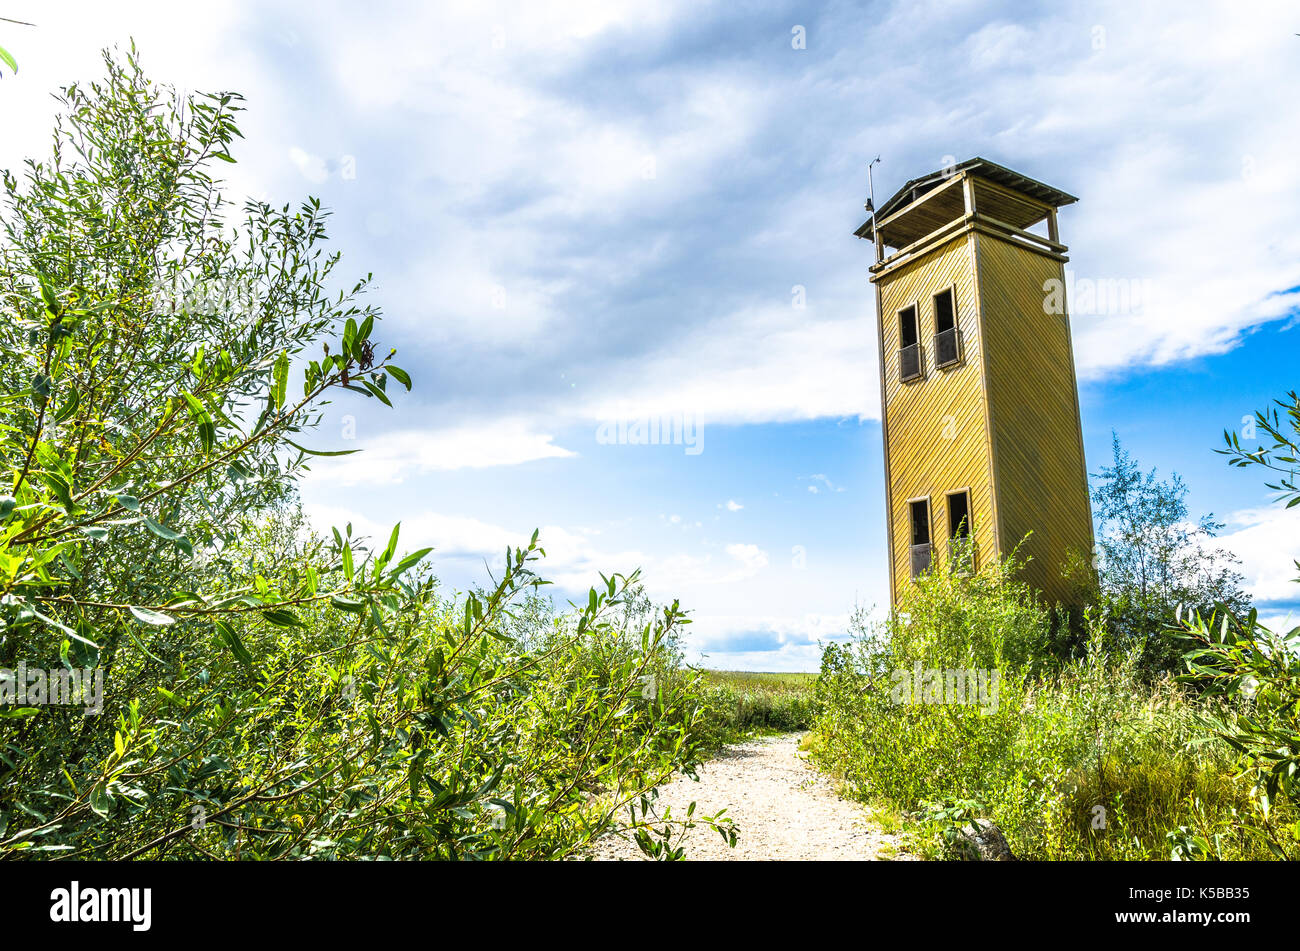 The Jõesuu observation tower on the shores of the Lake Võrtsjärv in Estonia Stock Photo